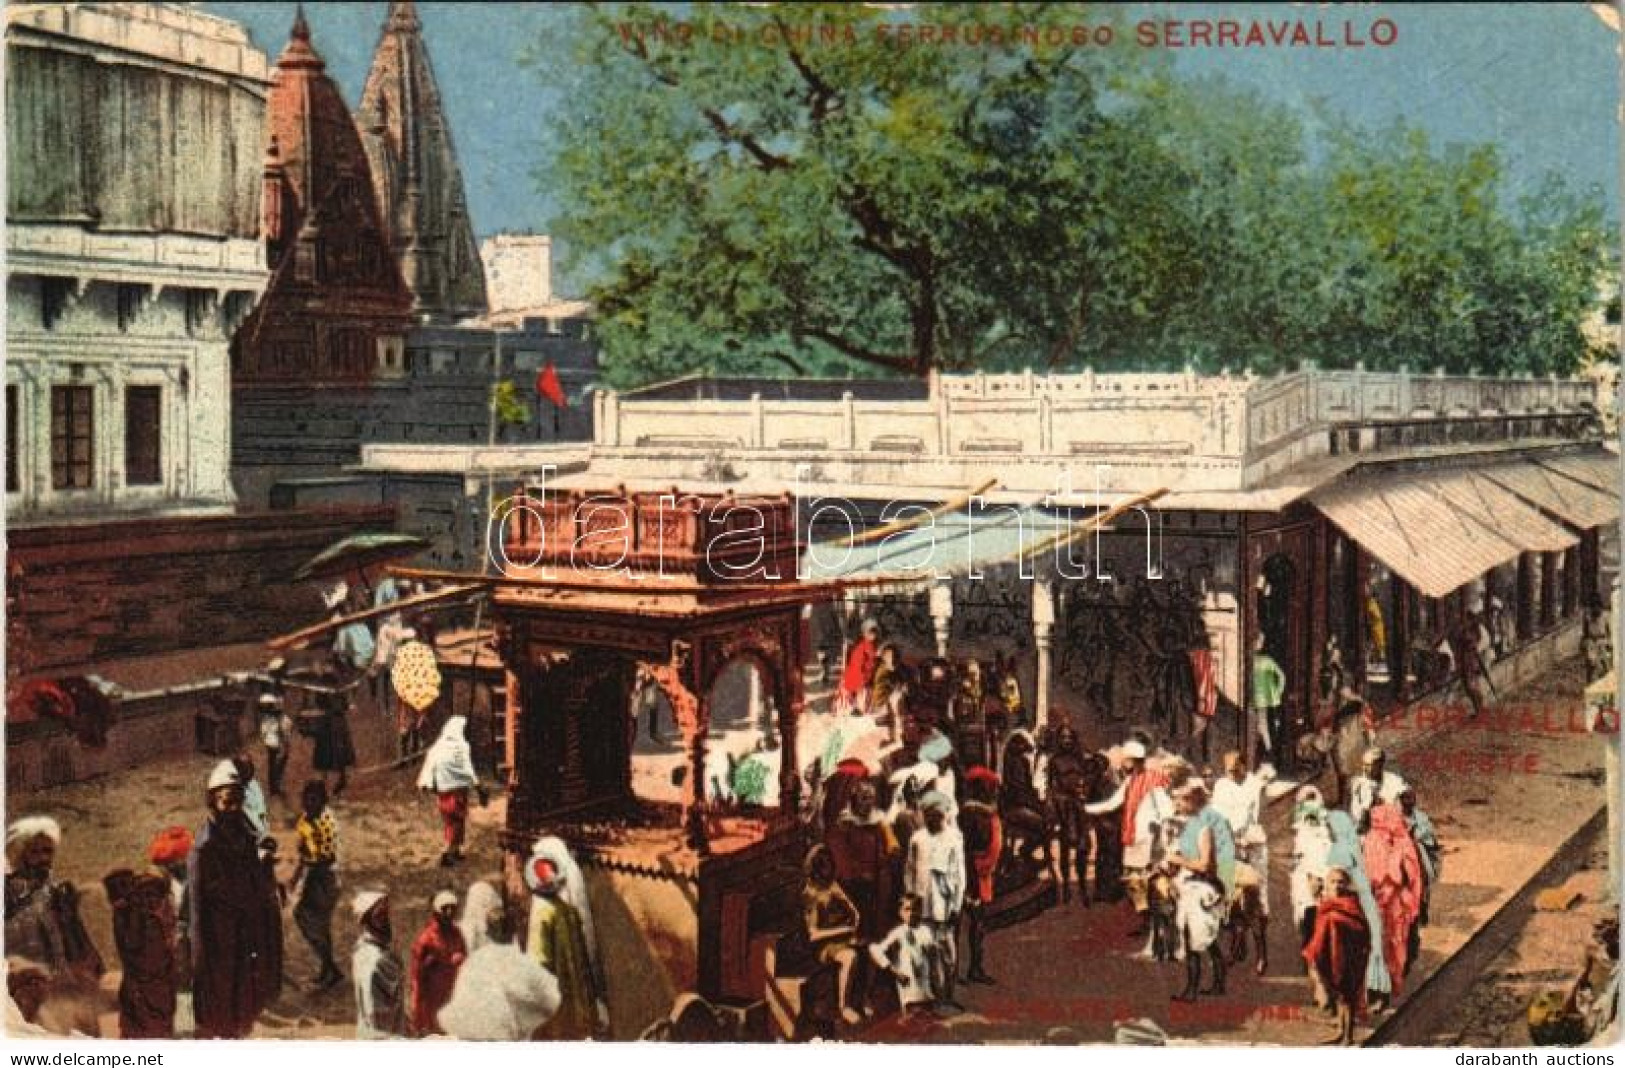 ** T2/T3 Varanasi, Benares; Bisharnat / Street View, Market, Indian Folklore. "Vino Di China Ferruginoso Serravallo" Ser - Unclassified